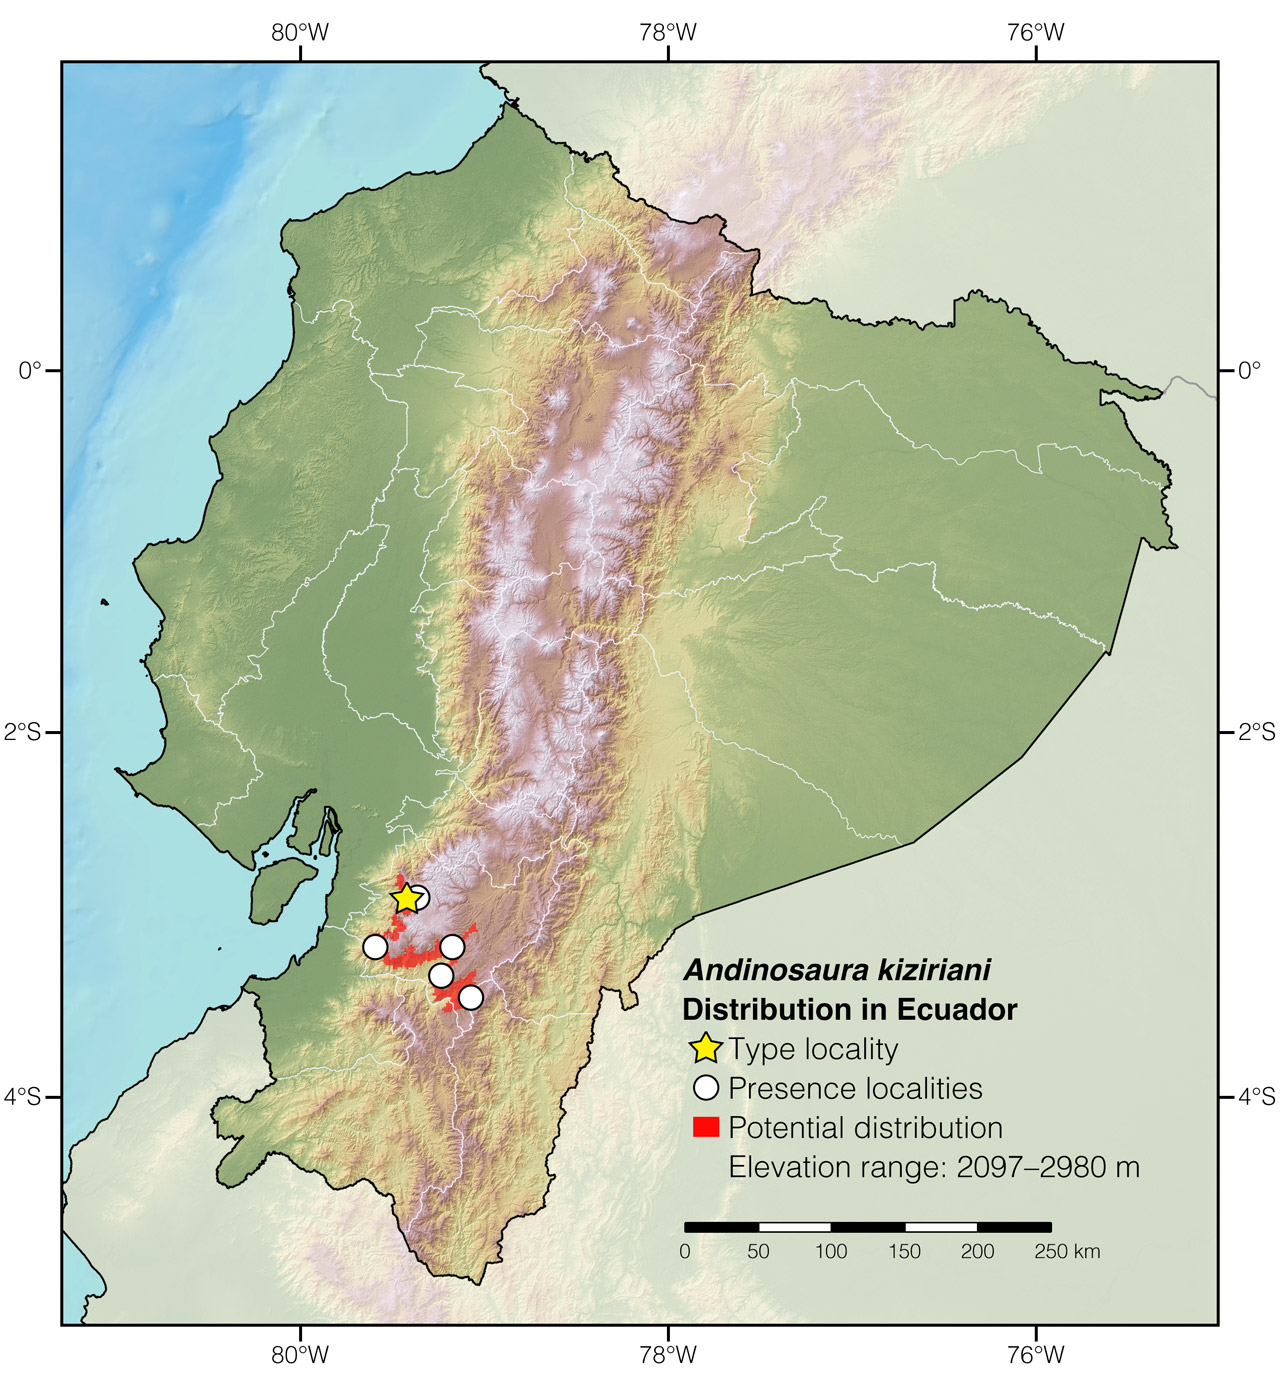 Distribution of Andinosaura kiziriani in Ecuador